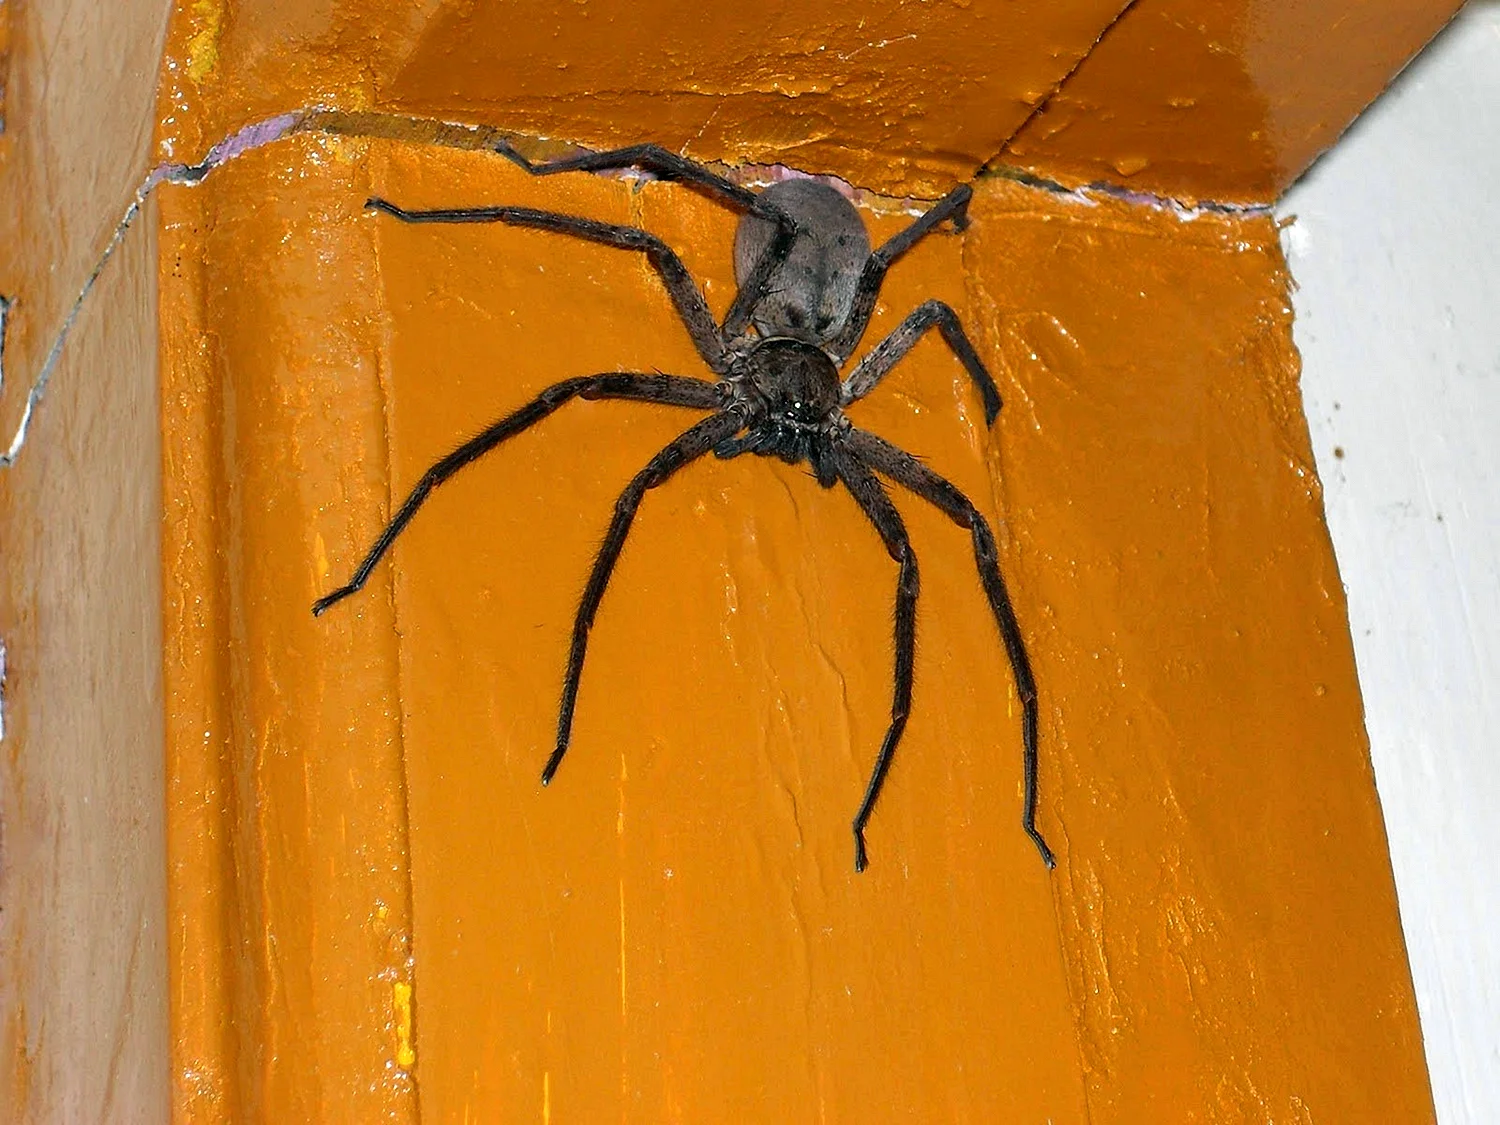 Домашний паук